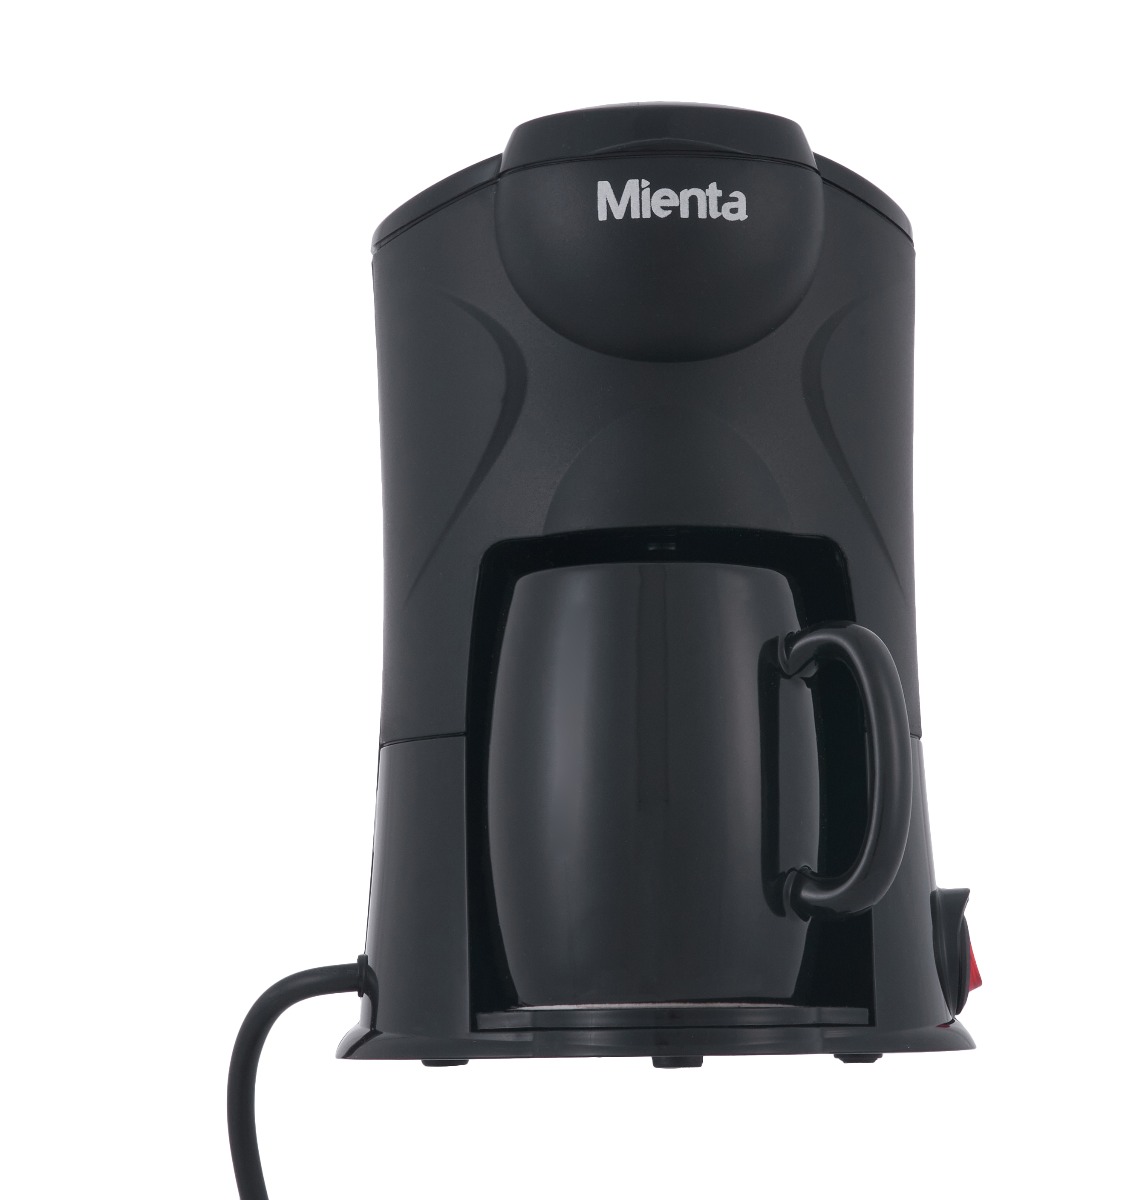 Mienta Coffee Maker, 300 Watt, Black - CM31416A